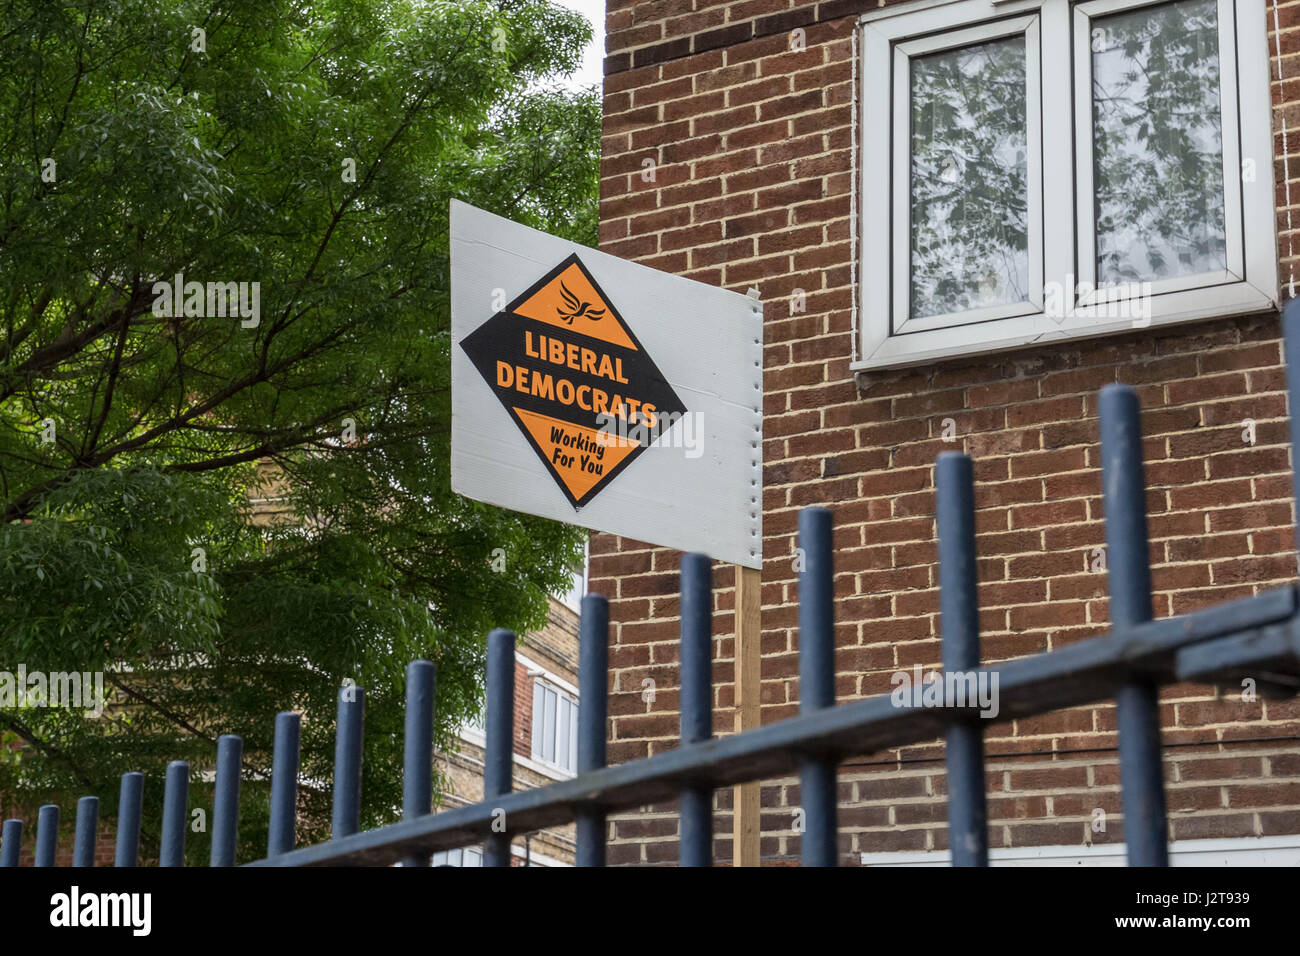 London, UK. 30th April, 2017. Liberal Democrats election board in Bermondsey south east London © Guy Corbishley/Alamy Live News Stock Photo